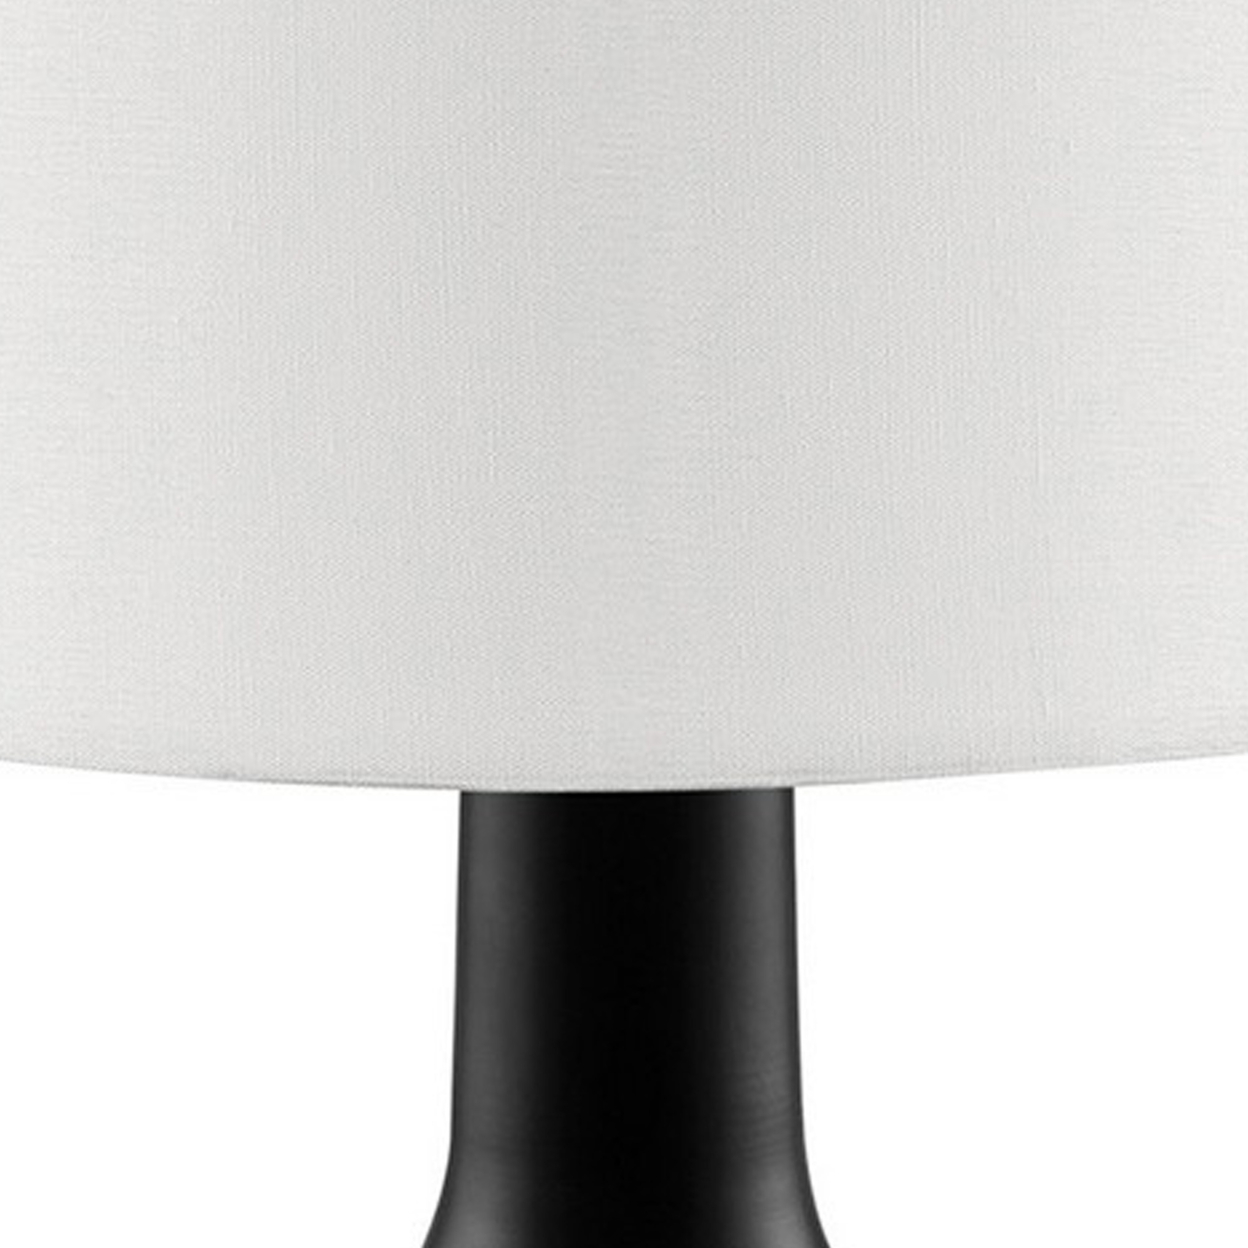 Table Lamp With Teardrop Metal Base And Fabric Shade, Black- Saltoro Sherpi